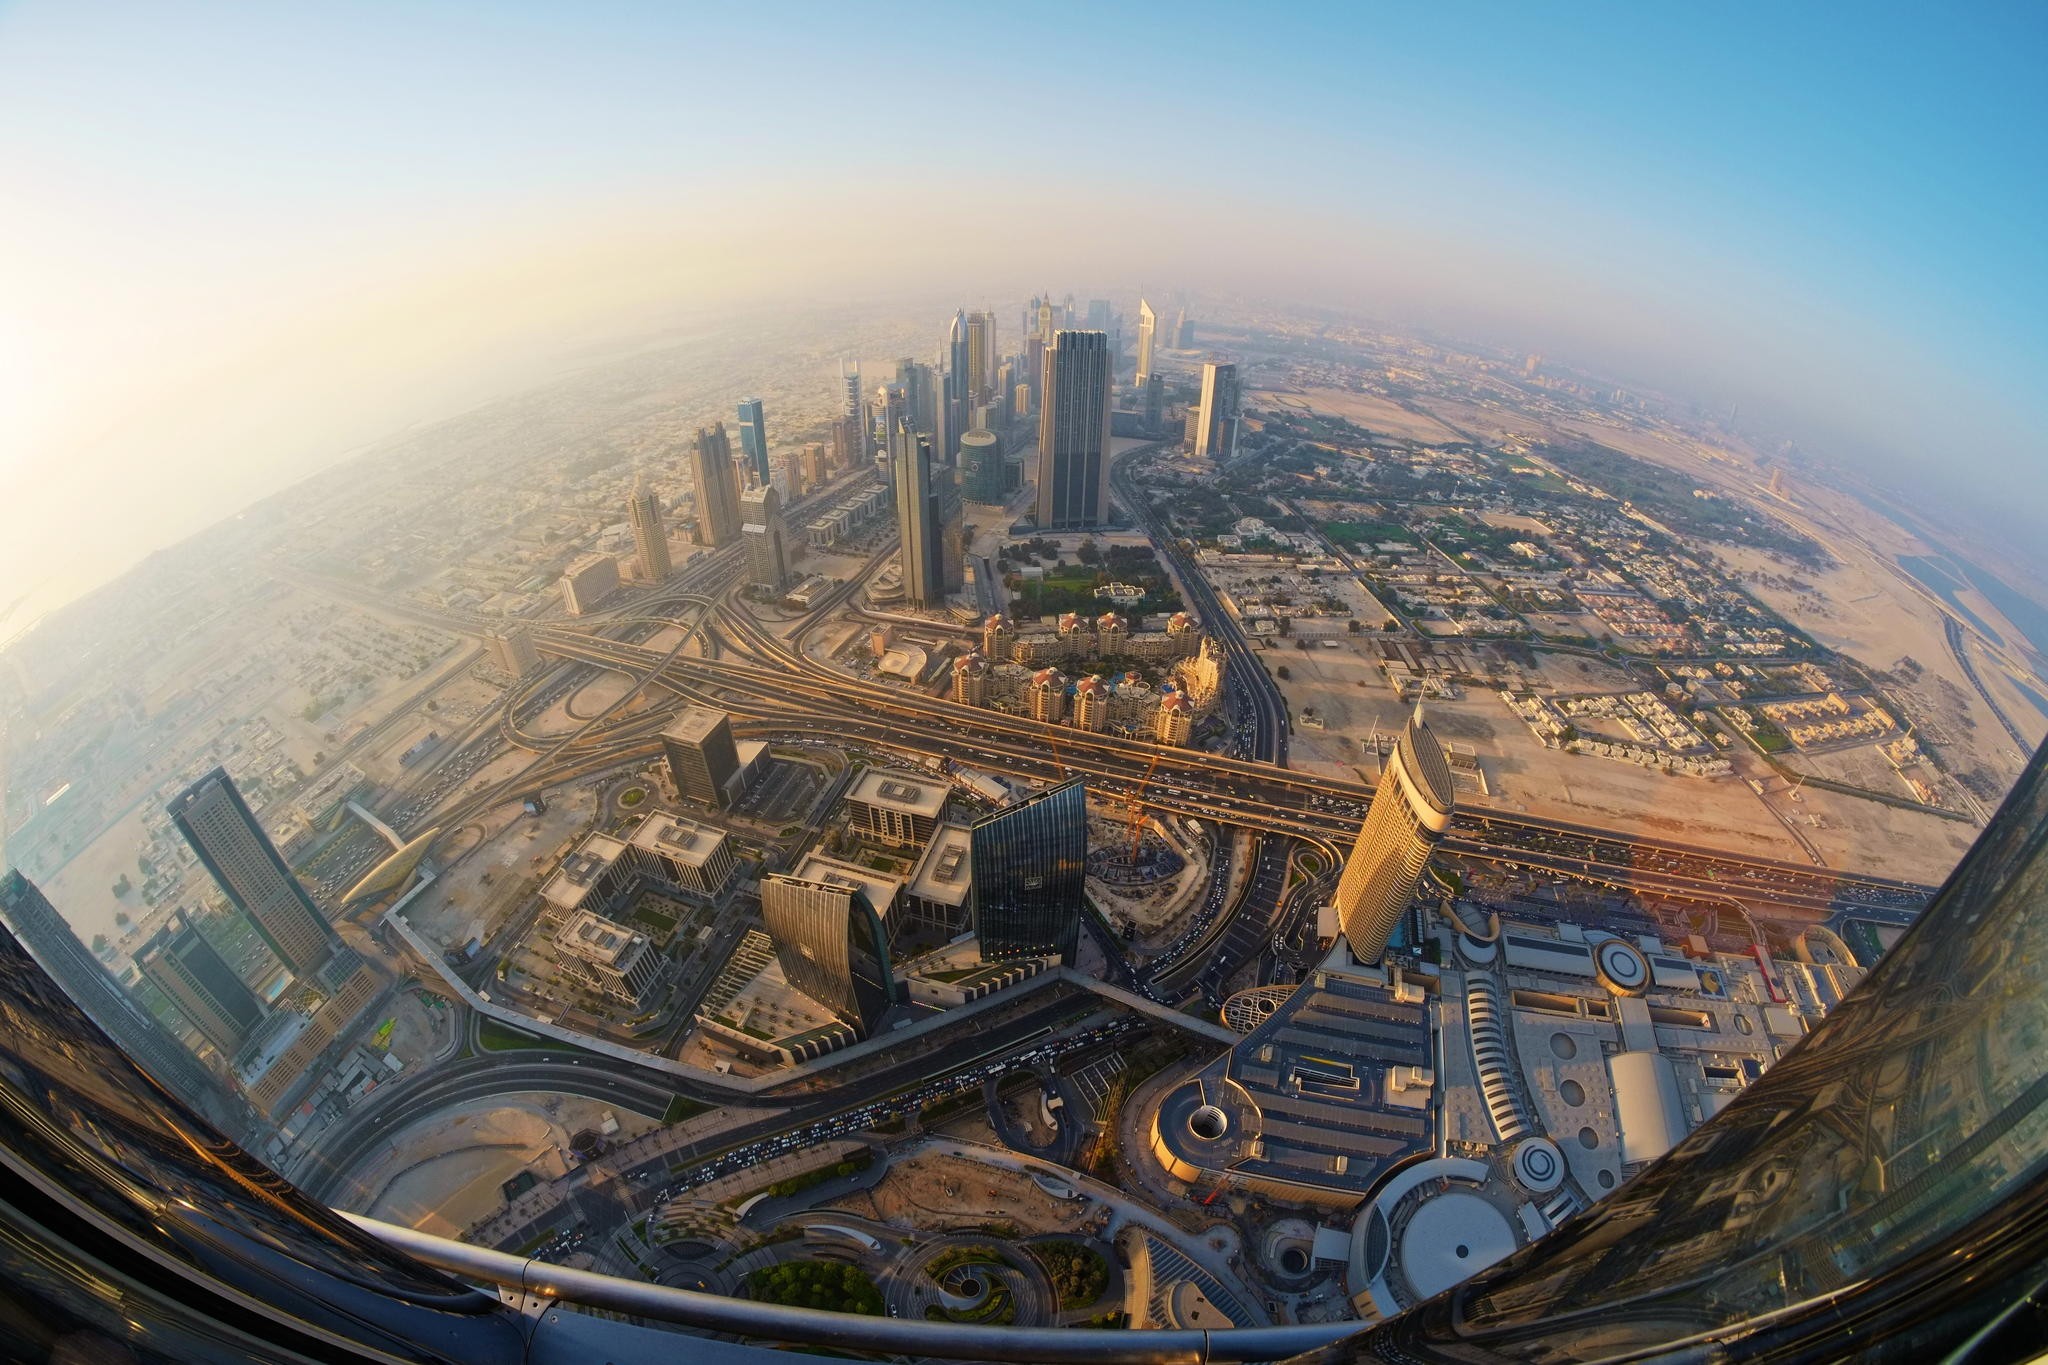 General 2048x1365 500px photography landscape Dubai high angle cityscape